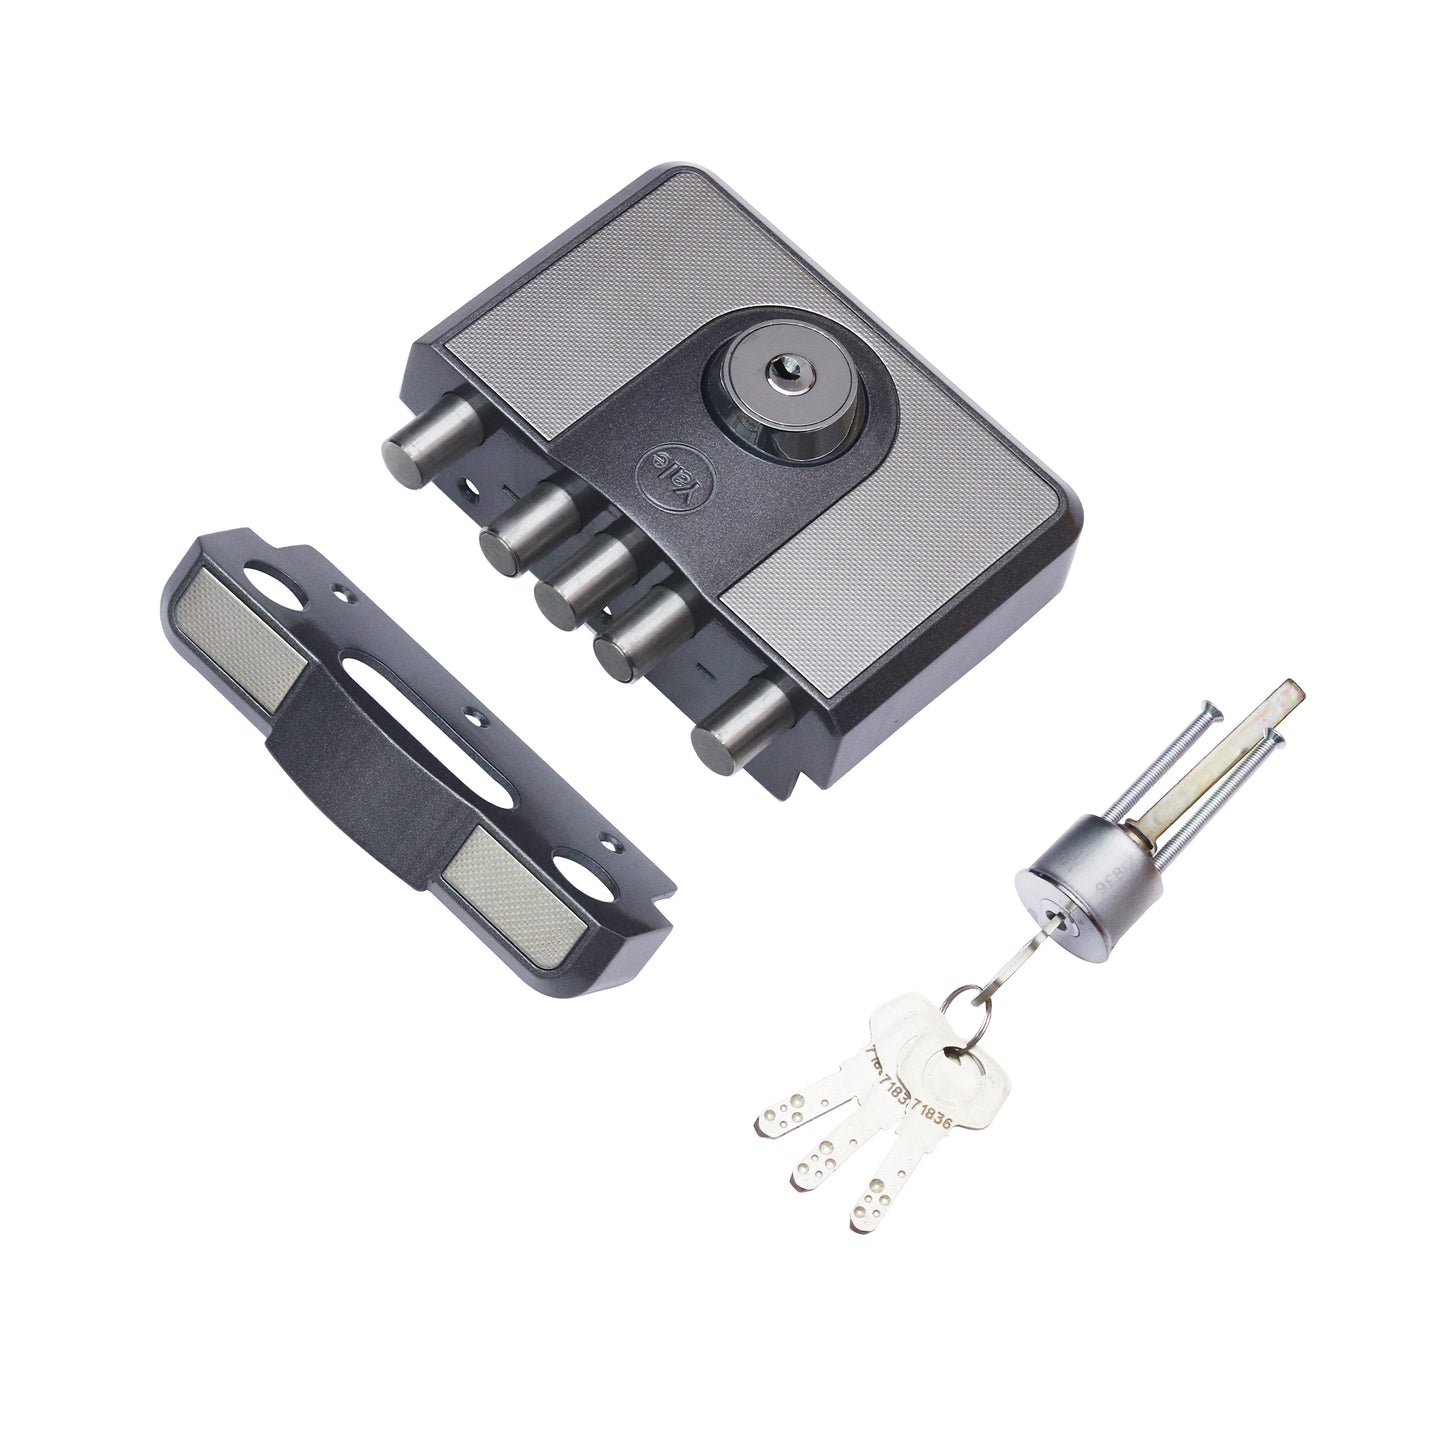 CBD-Cinco 500 Series 5 Dead Bolt Main Door RIM Lock, Both Side Keys, Grey, With Dimple Keys